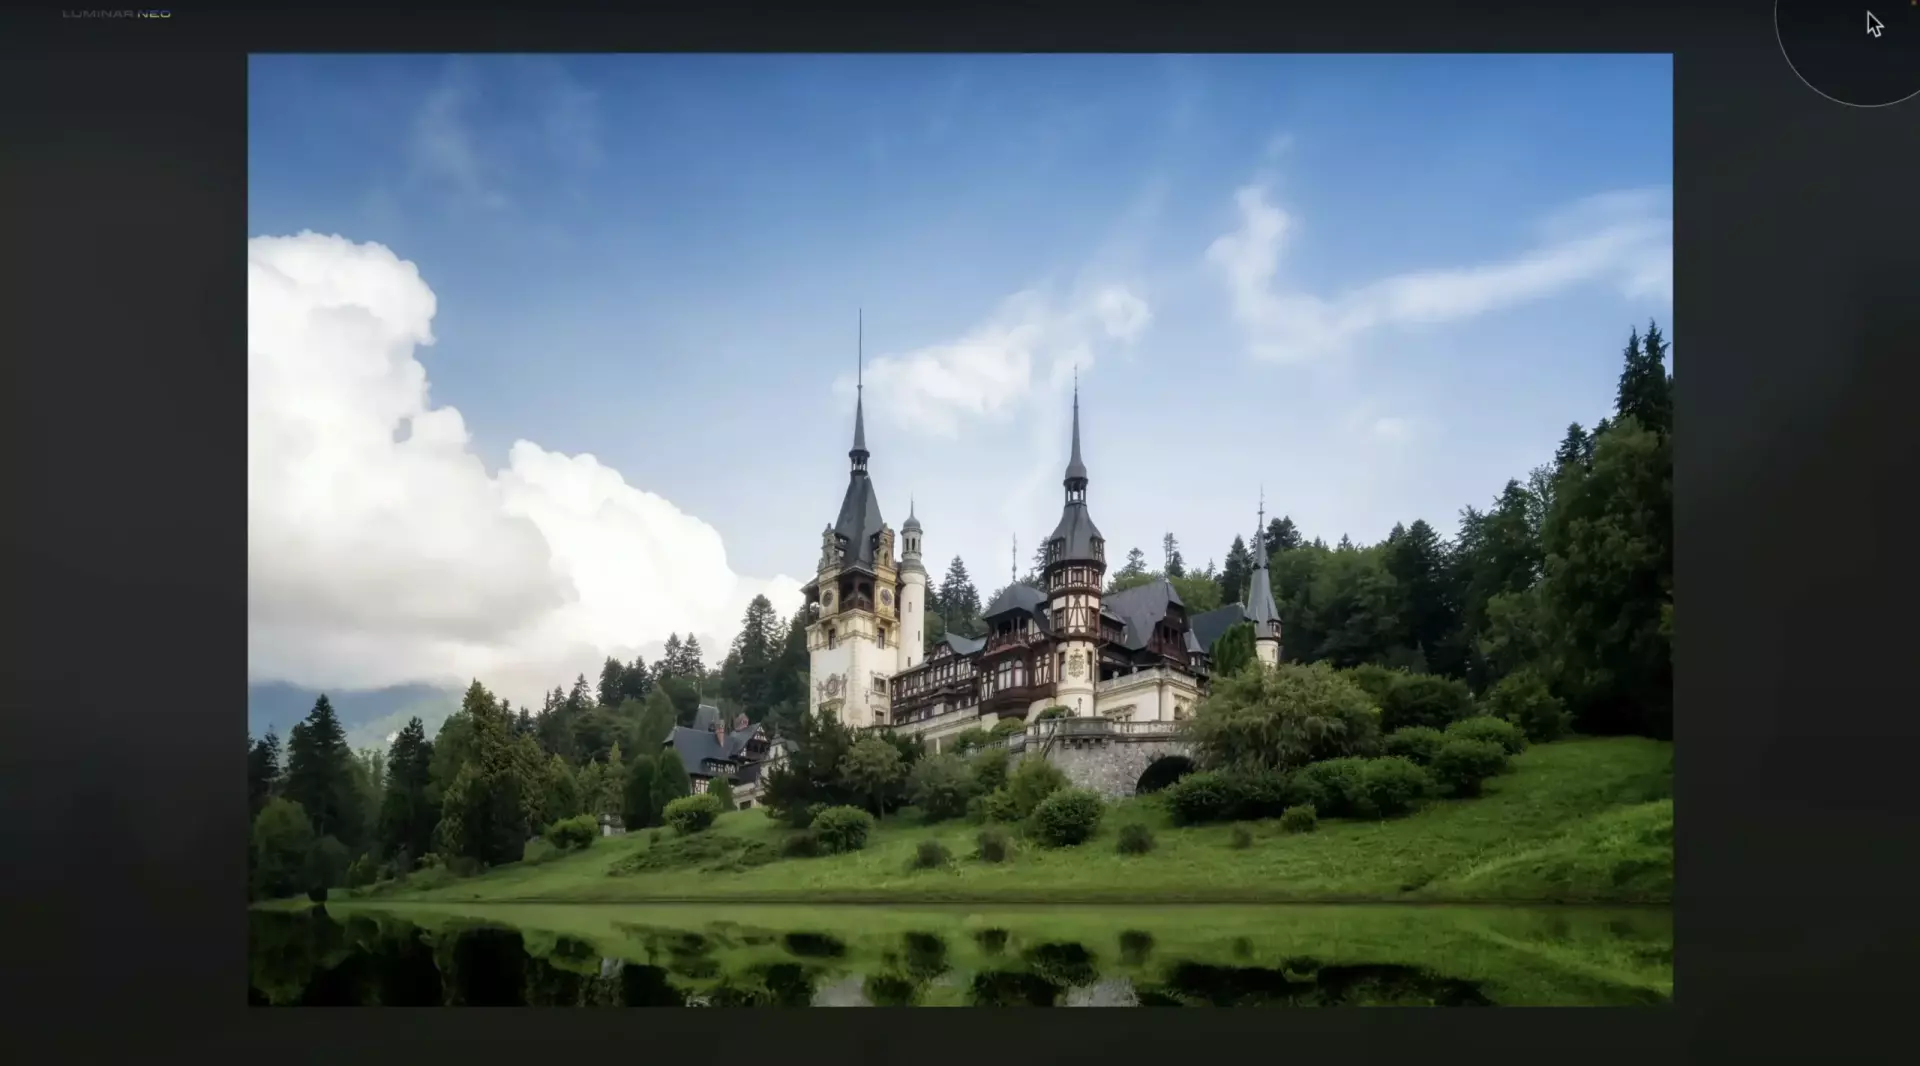 Landscape of a European Castle by Jakub Bors